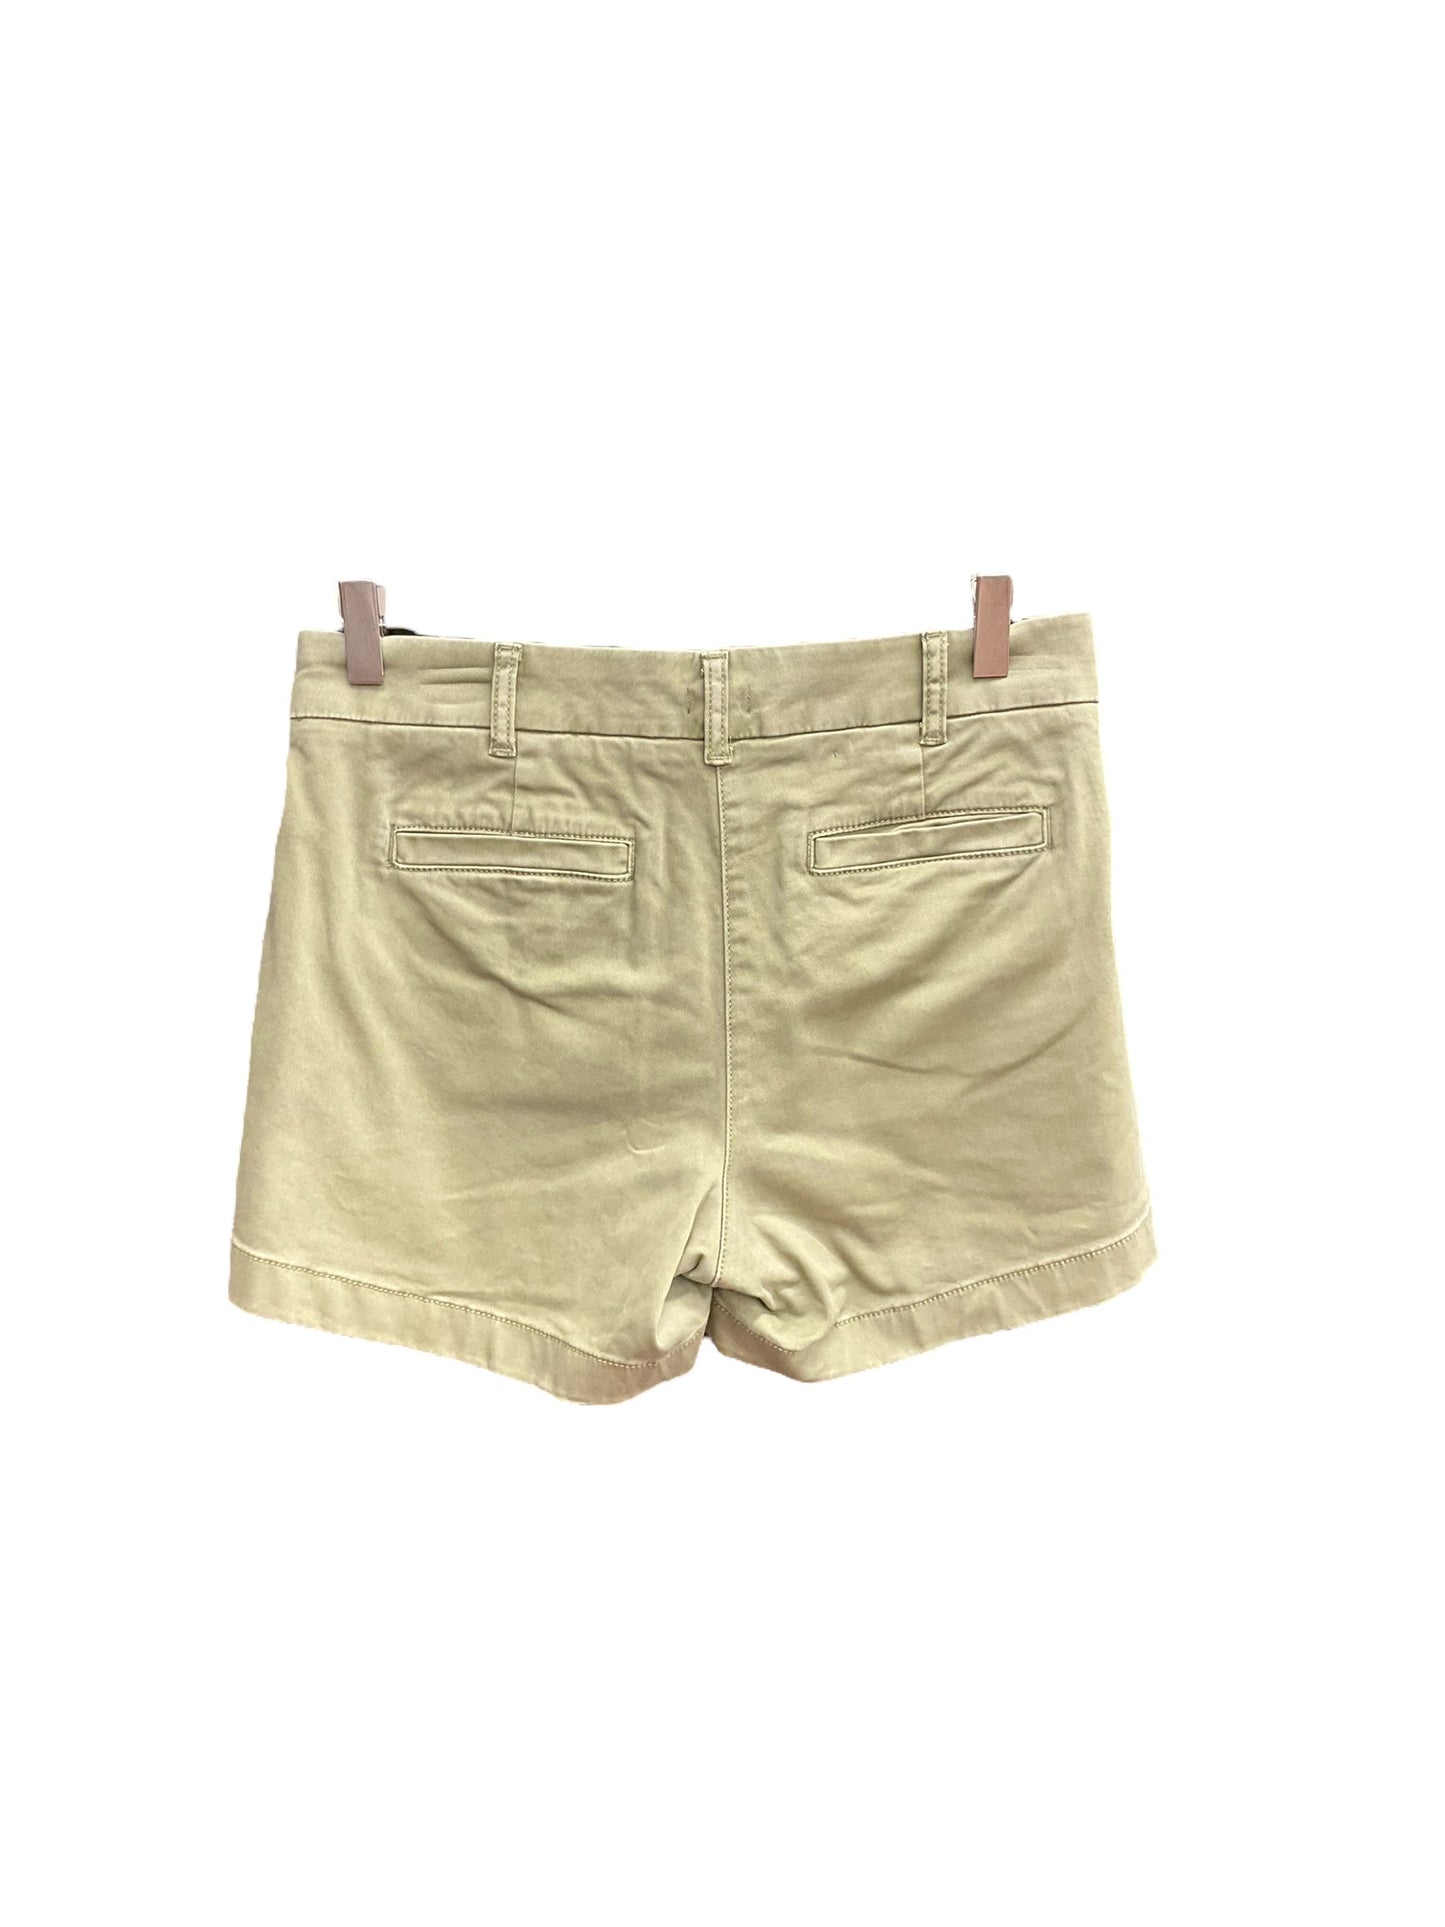 Green Shorts Cmb, Size 2